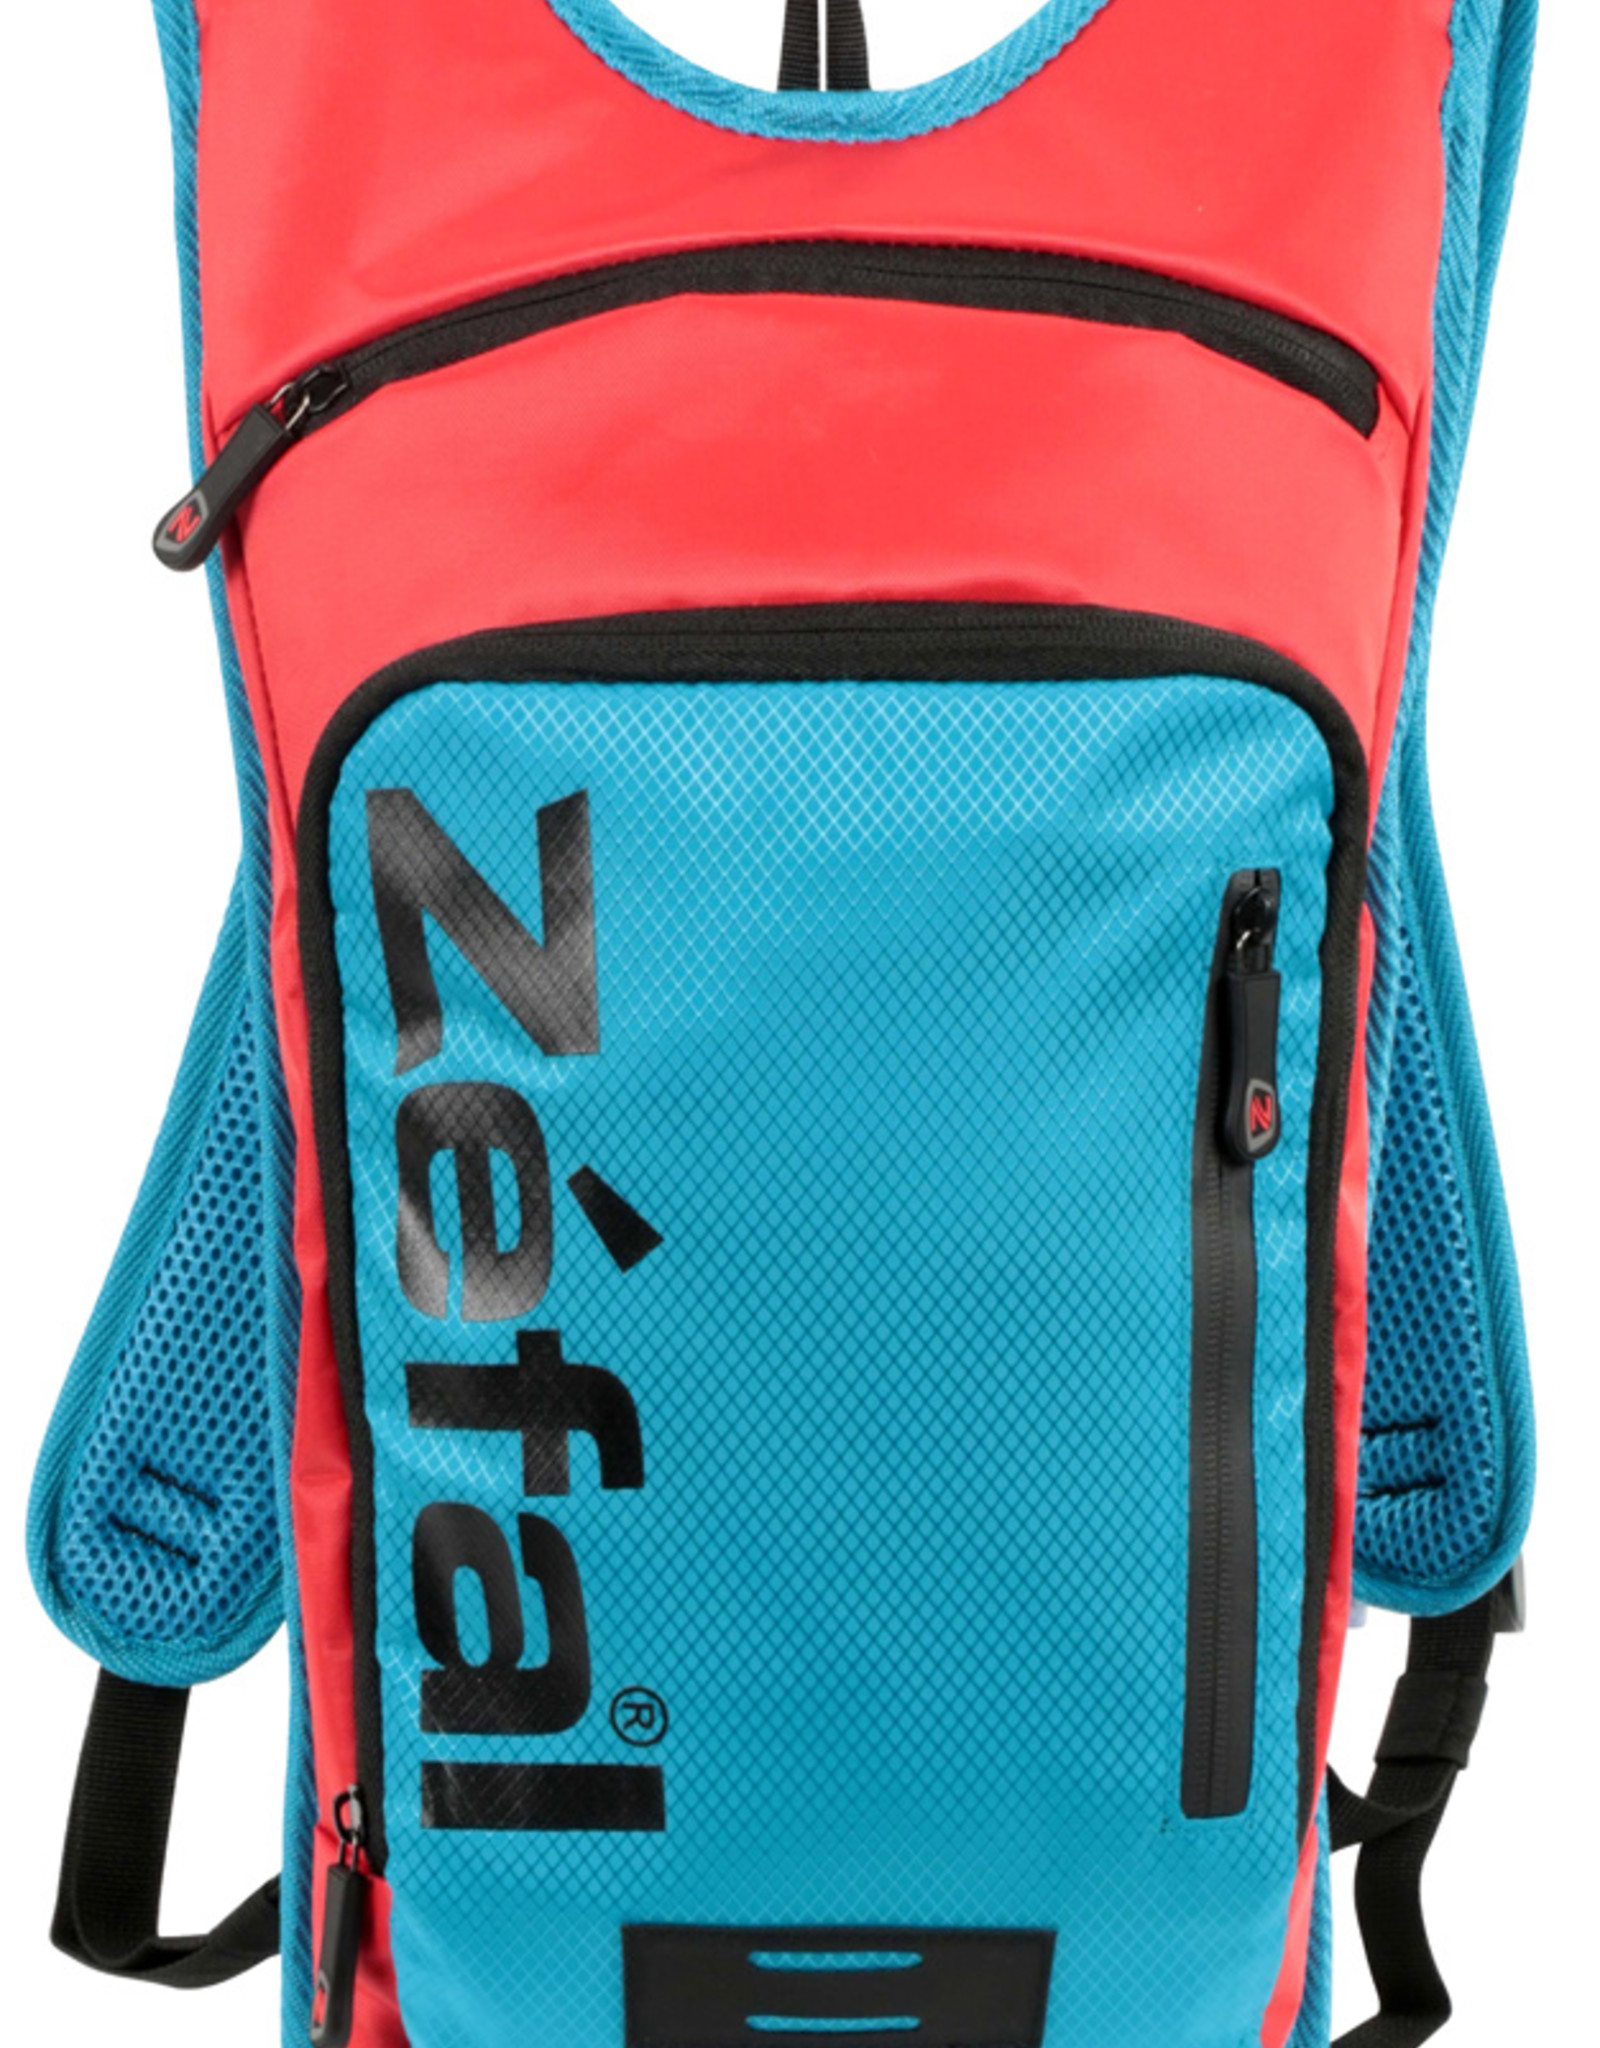 Zefal Z Hydro Hydration Bag Red/Blue Large (2L)